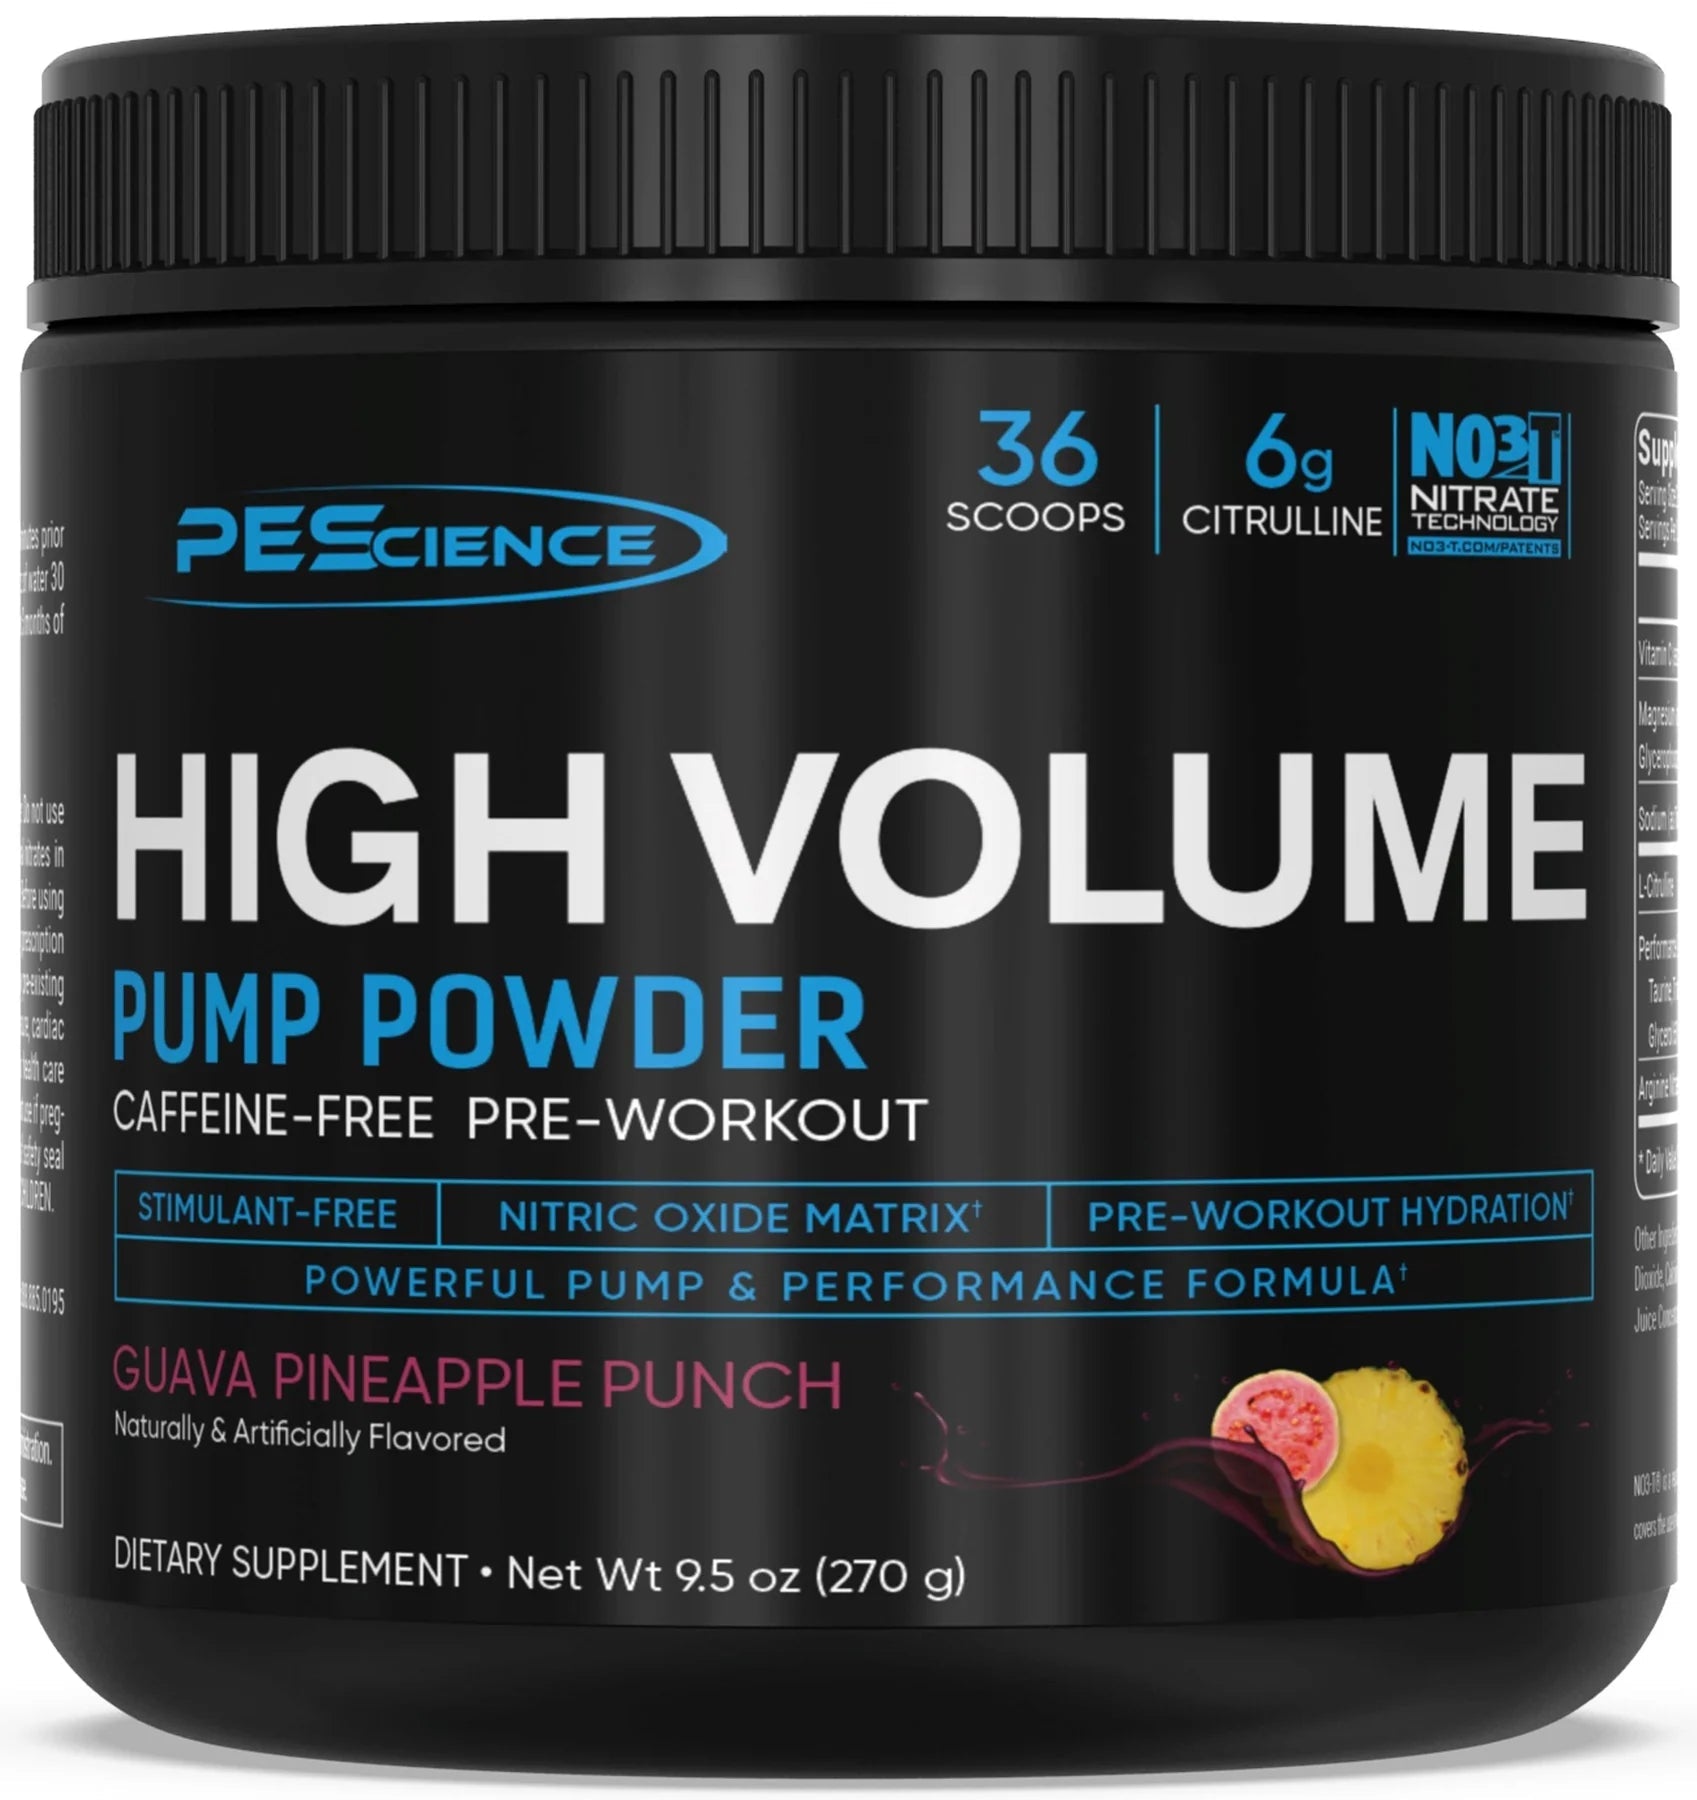 PEScienceHigh Volume - Pre-Workout Pump PowderPre-Workout Pump PowderRED SUPPS